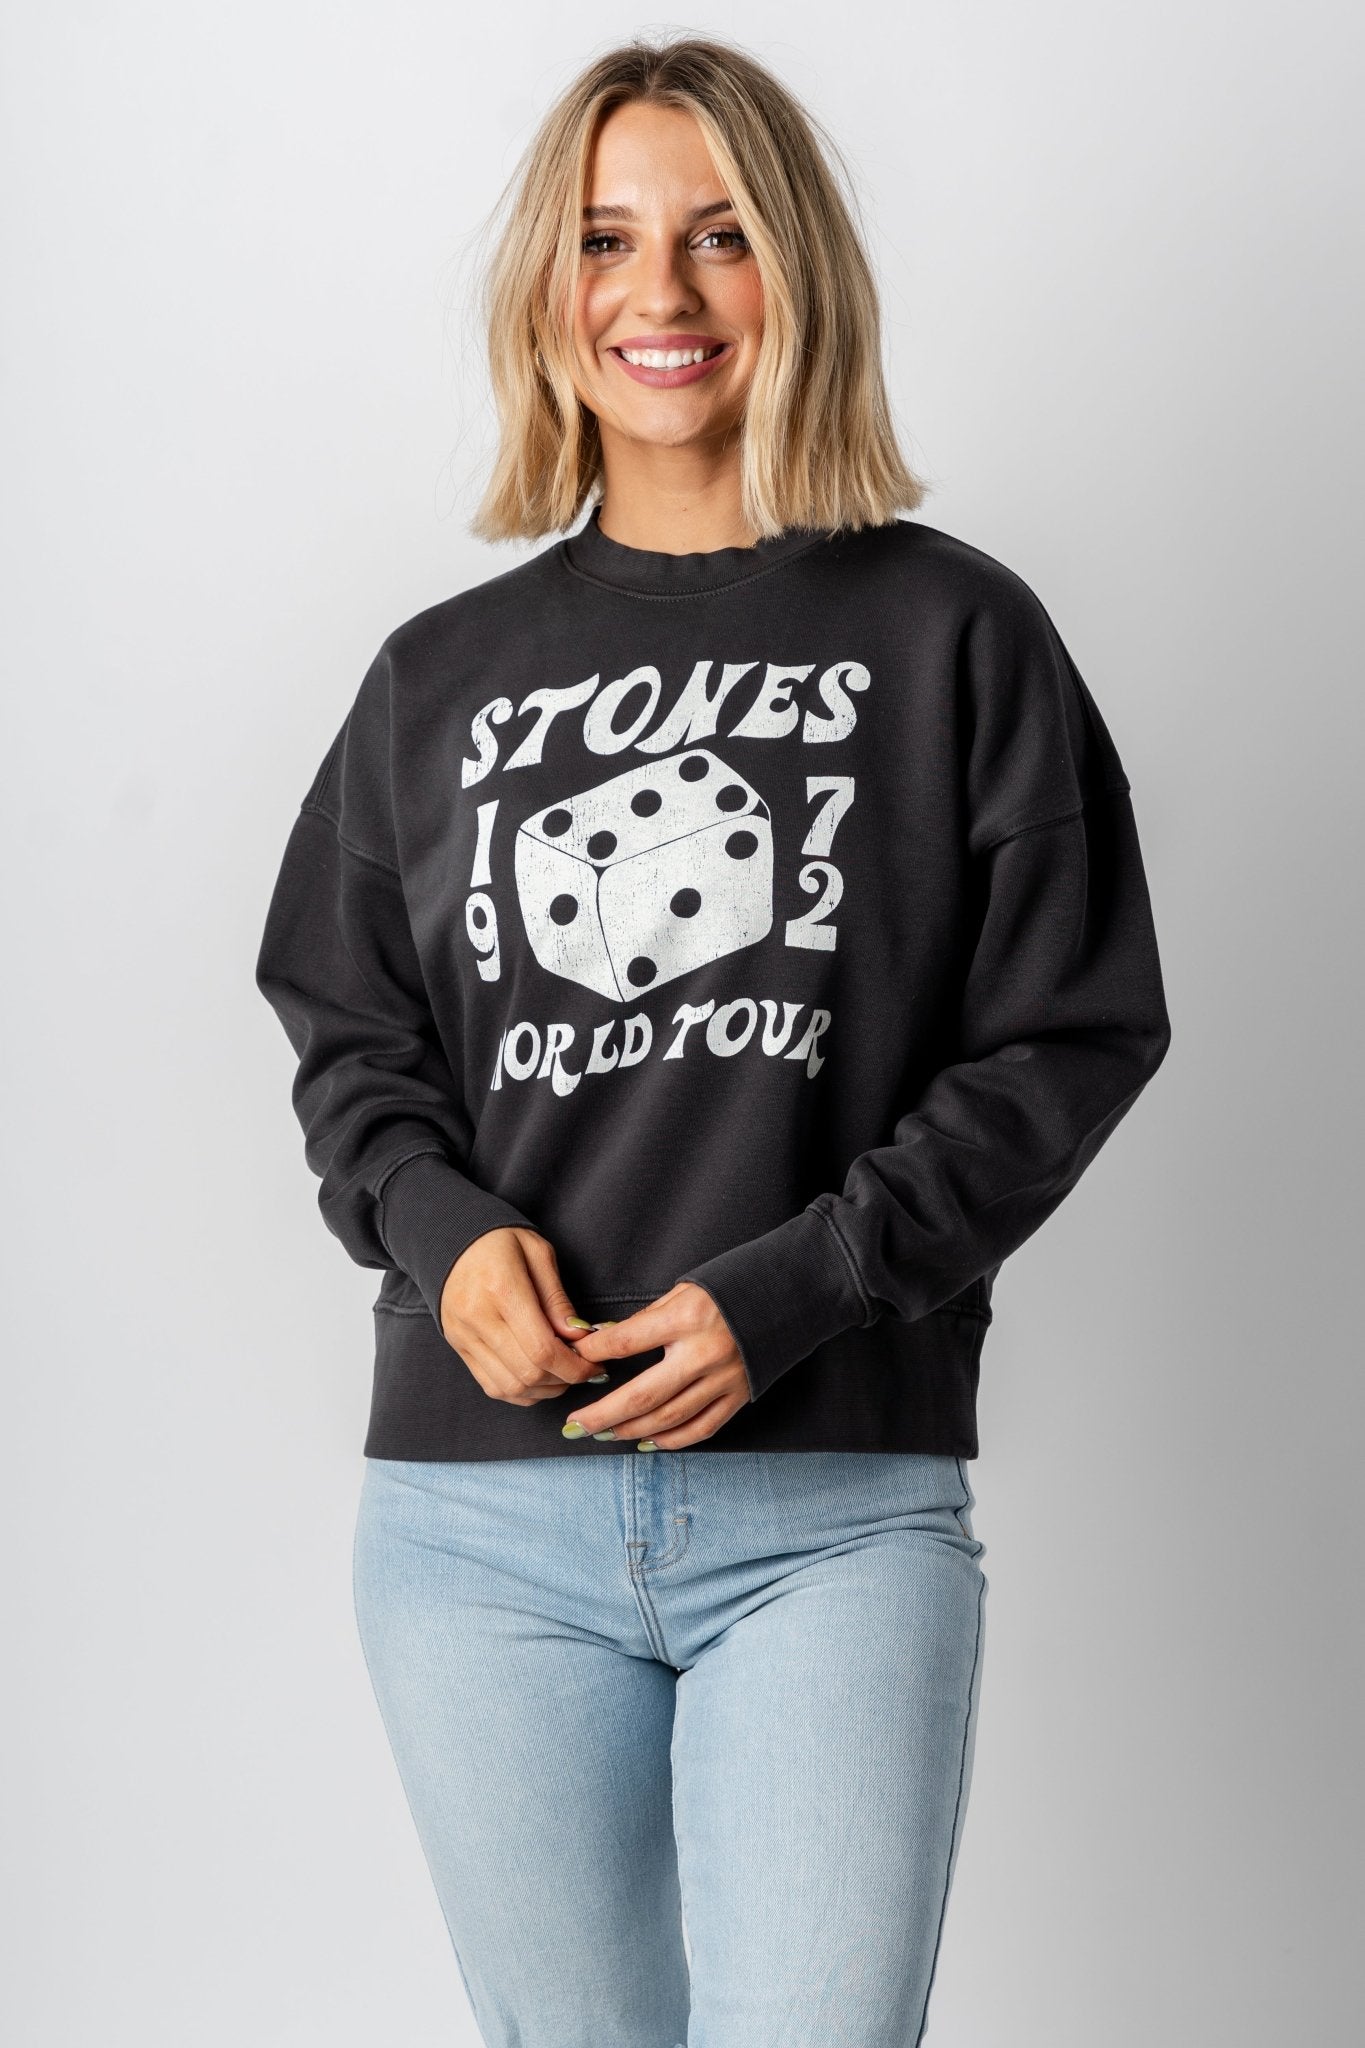 Rolling Stones dice sweatshirt smoke - Stylish Band T-Shirts and Sweatshirts at Lush Fashion Lounge Boutique in Oklahoma City